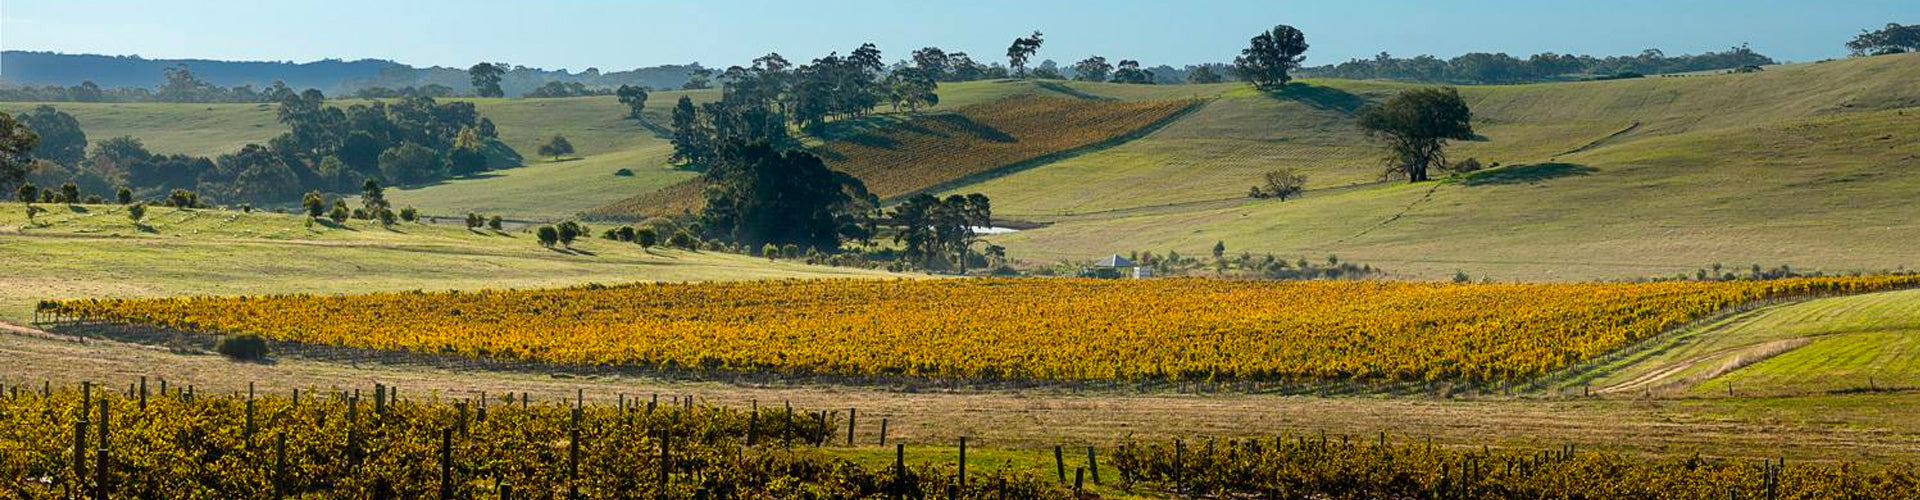 Grosset Vineyard in Clare Valley, South Australia